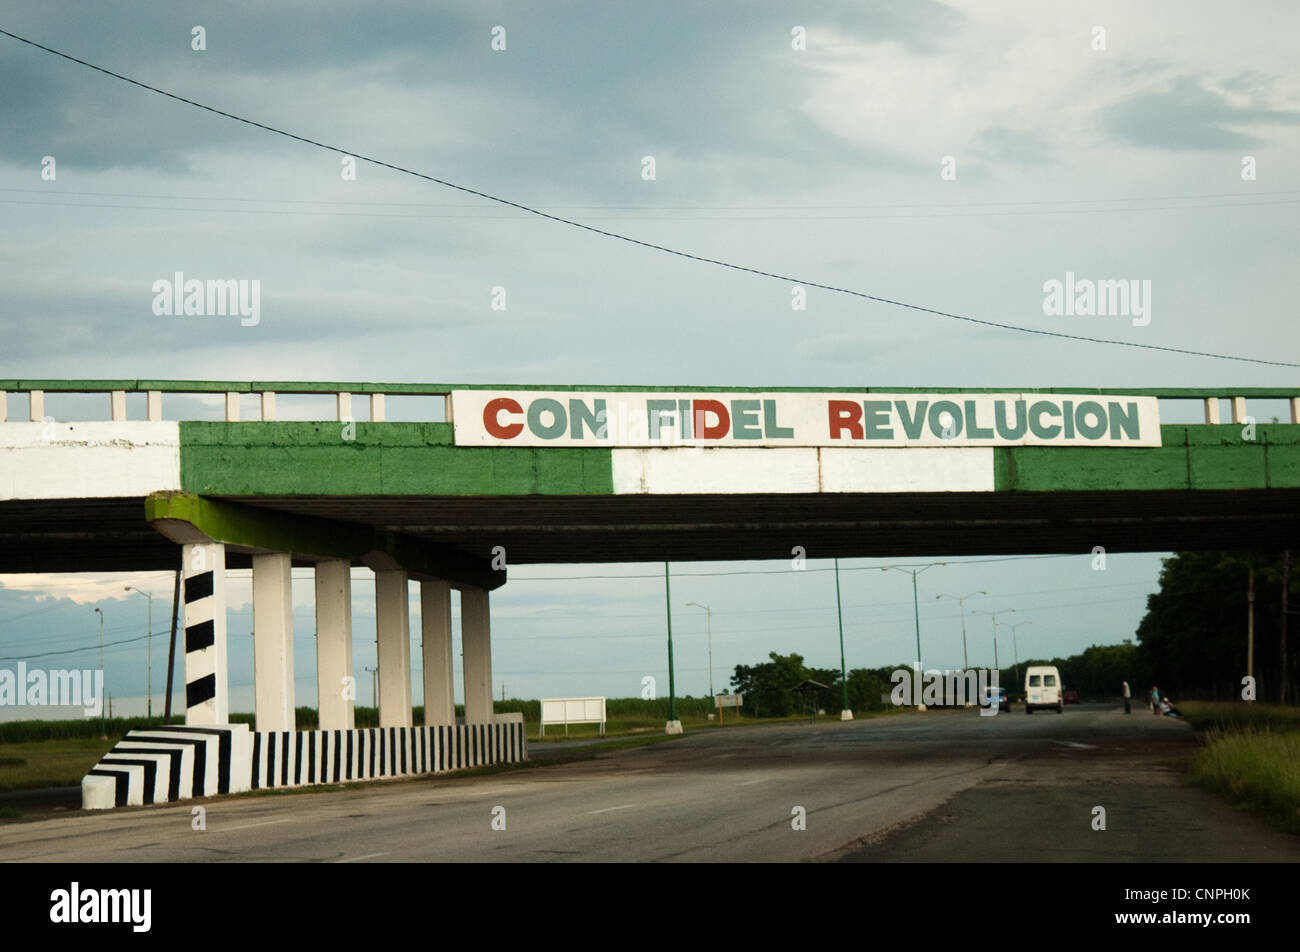 Con Fidel Revolution, socialist message on the motorway, Cuba Stock Photo